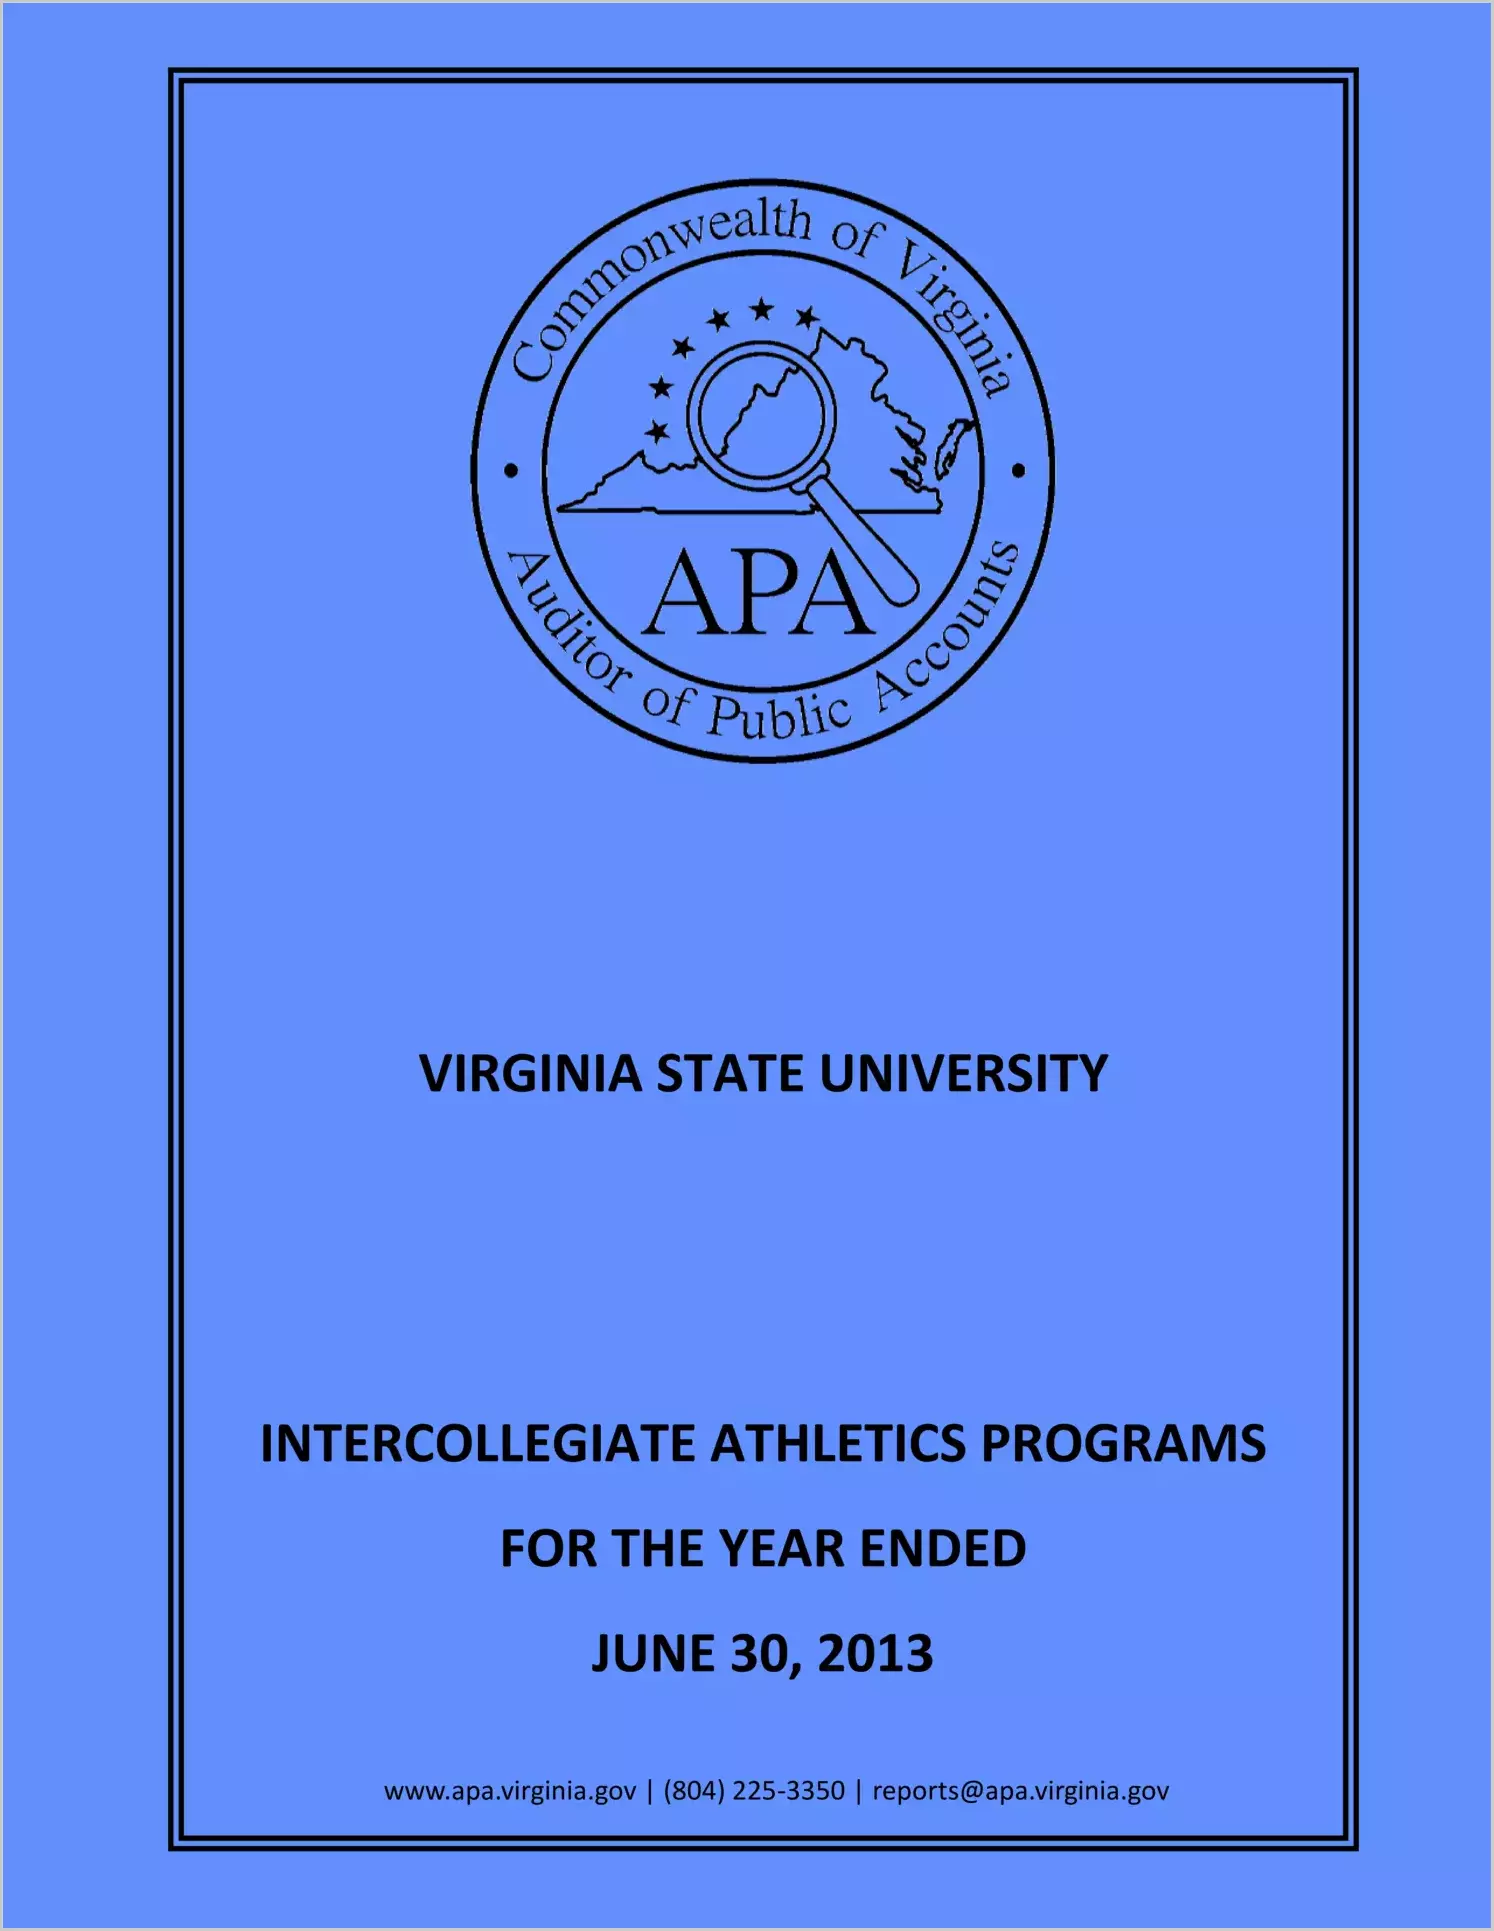 Virginia State University Intercollegiate Athletics Programs for the year ended June 30, 2013